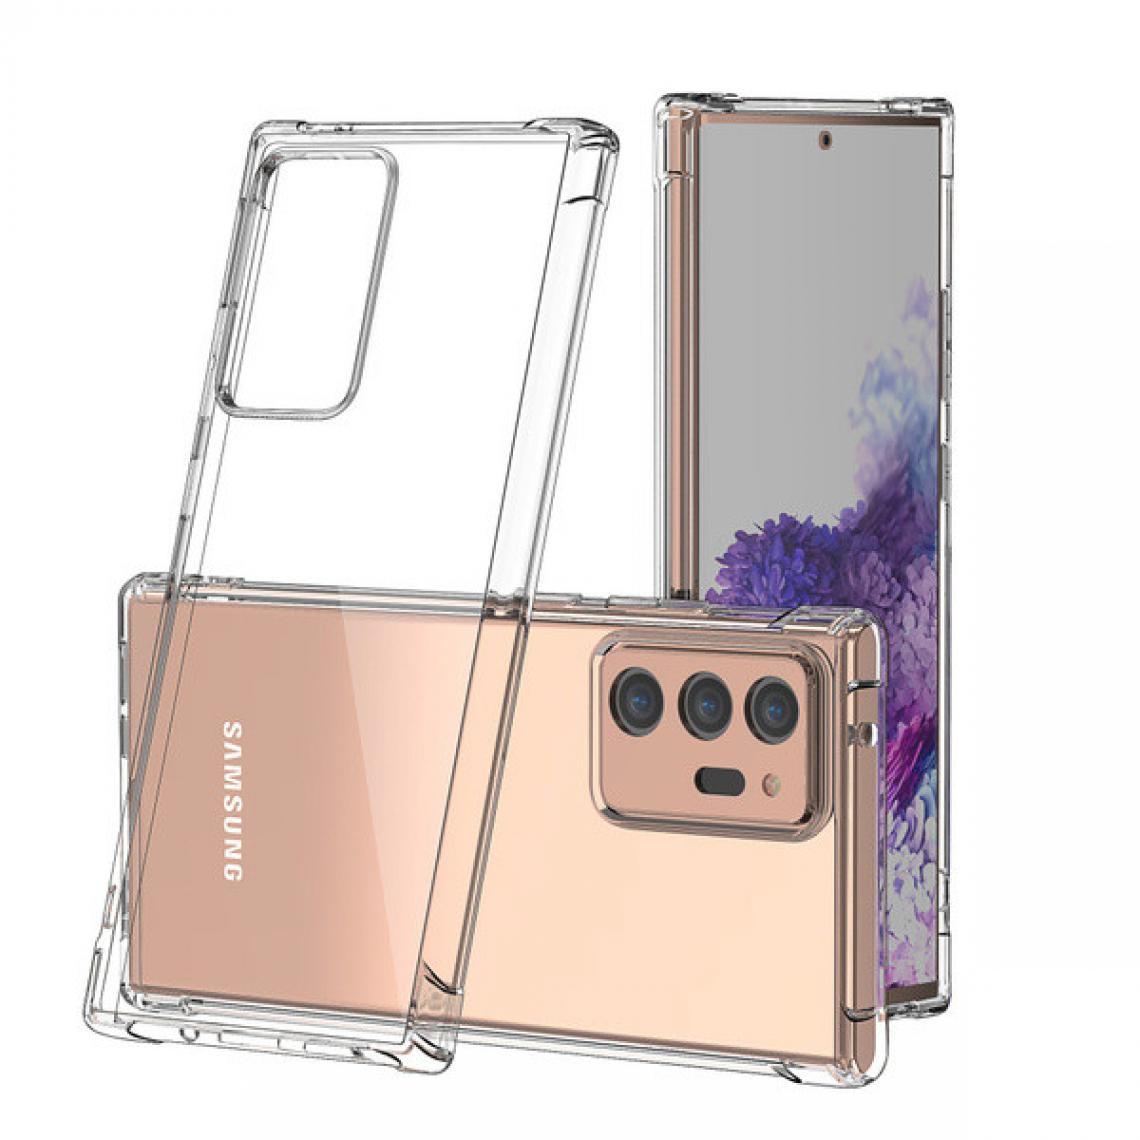 Shot - Coque Silicone Anti-Chocs pour "SAMSUNG Galaxy Note 20 Ultra" Transparente Protection Gel Souple (TRANSPARENT) - Coque, étui smartphone